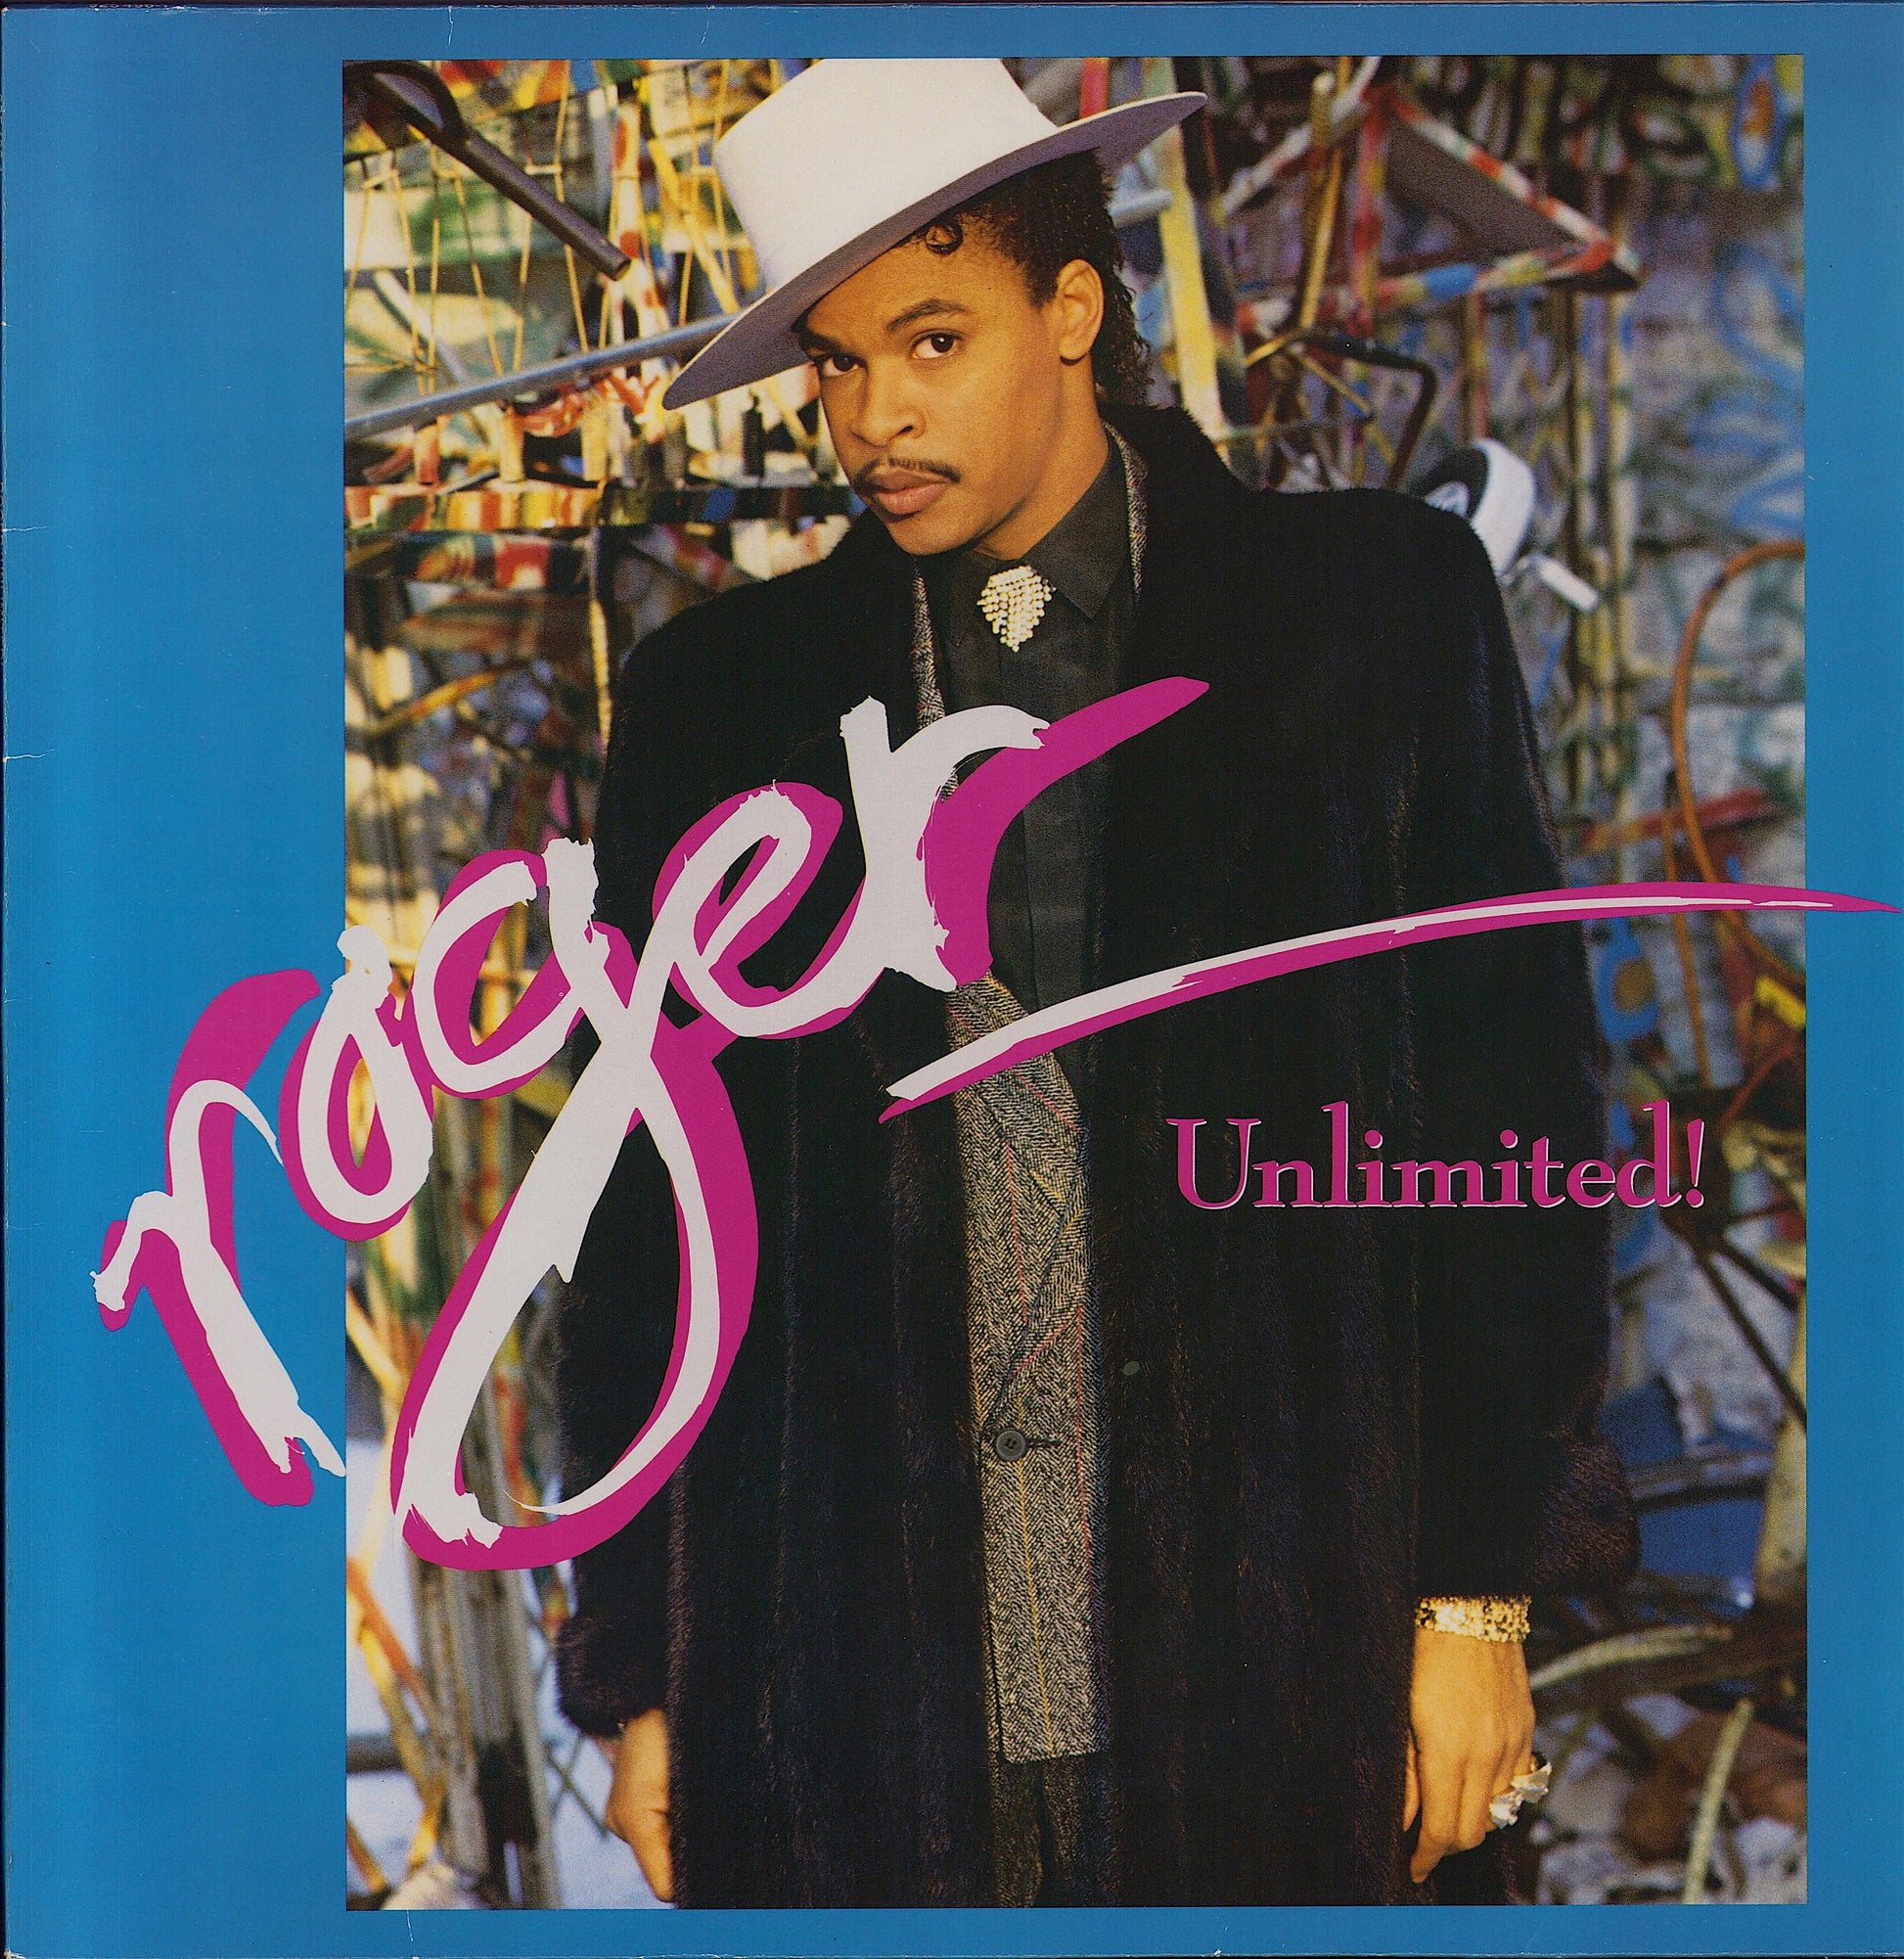 Roger - Unlimited (Vinyl LP)